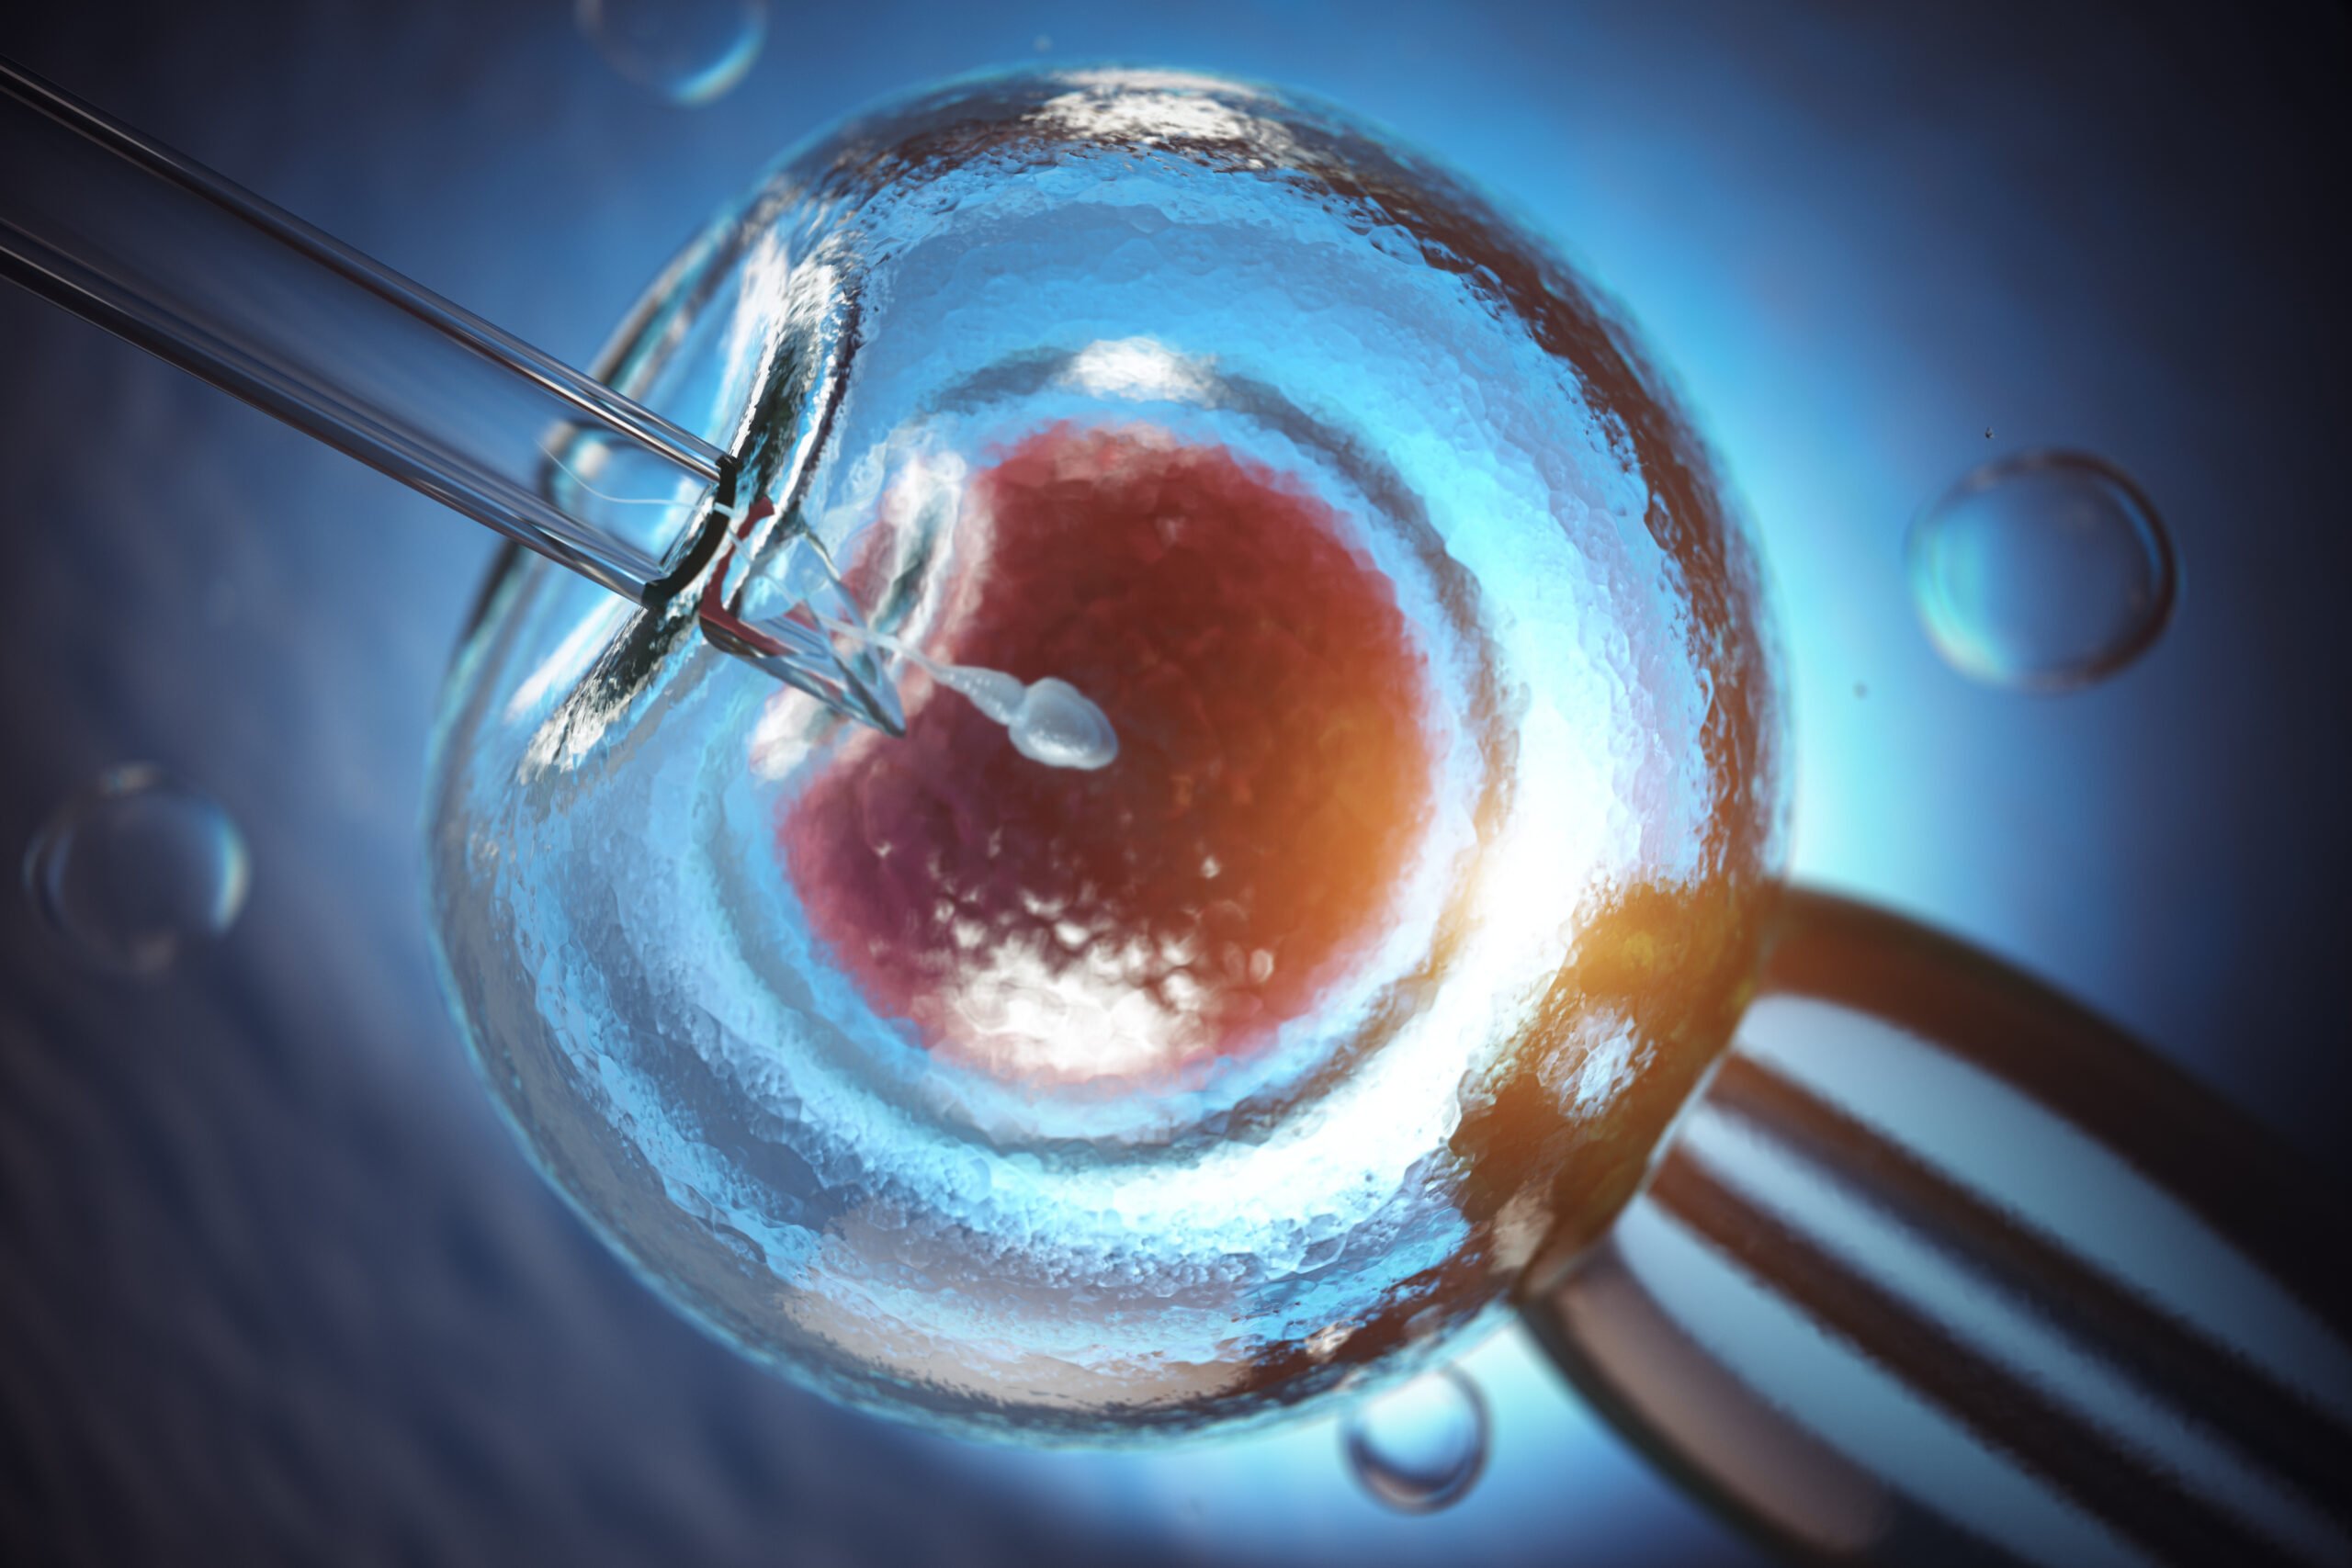 Artificial insemination. Fertilization of human egg cells by sperm. IVF in vitro fertilization. 3d illustration